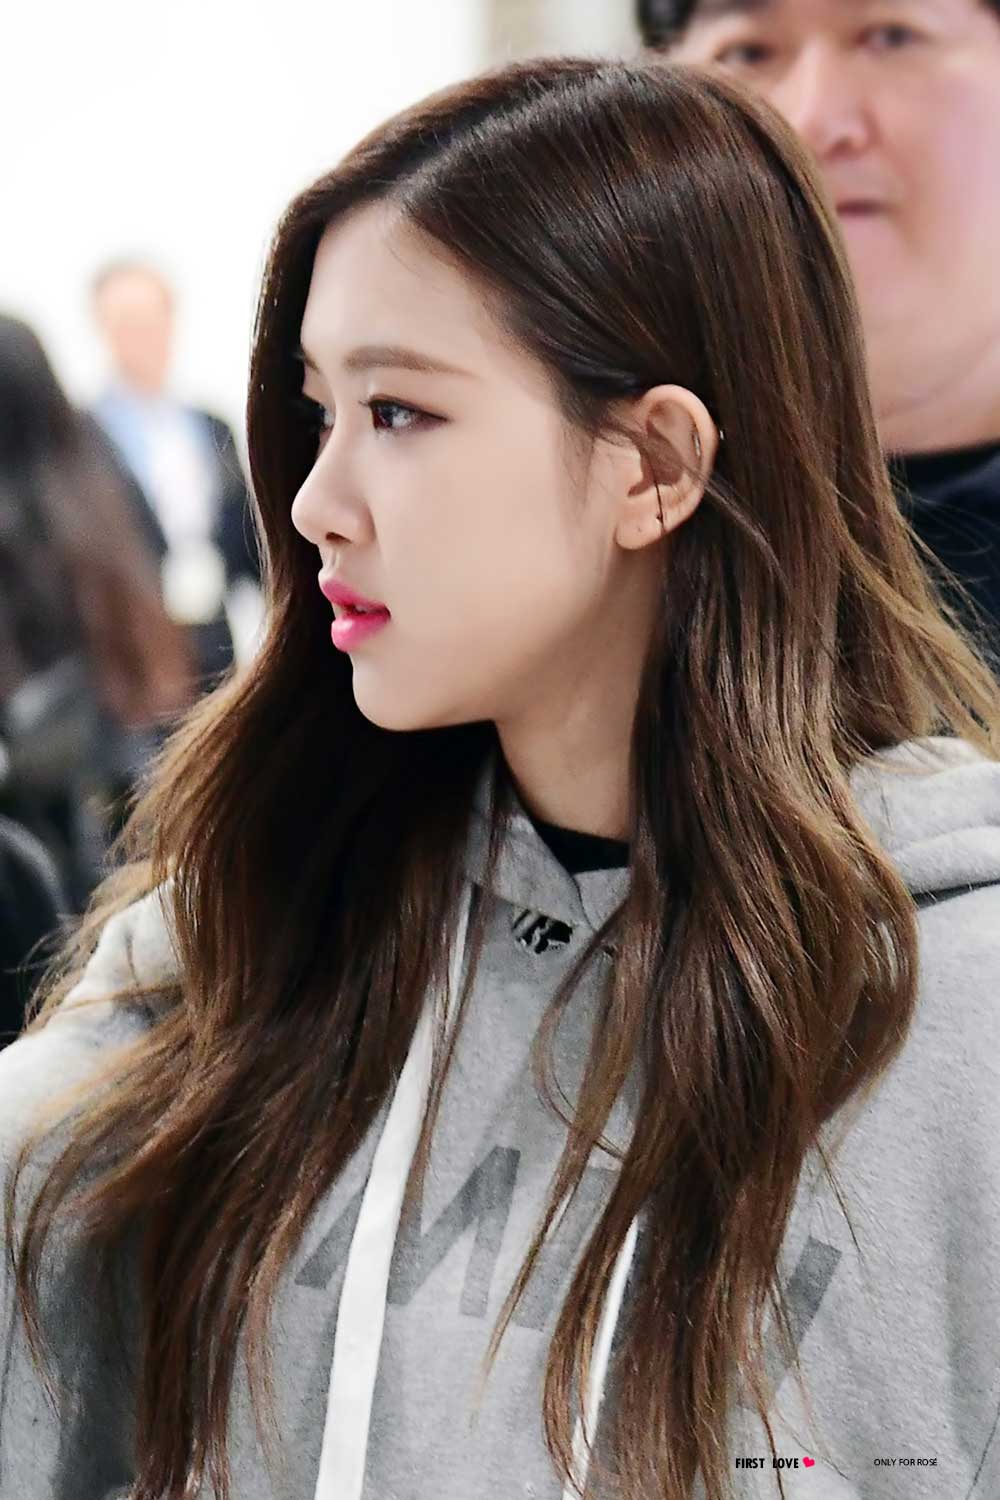 Blackpink Rose Airport Fashion 5 April 2018 Incheon